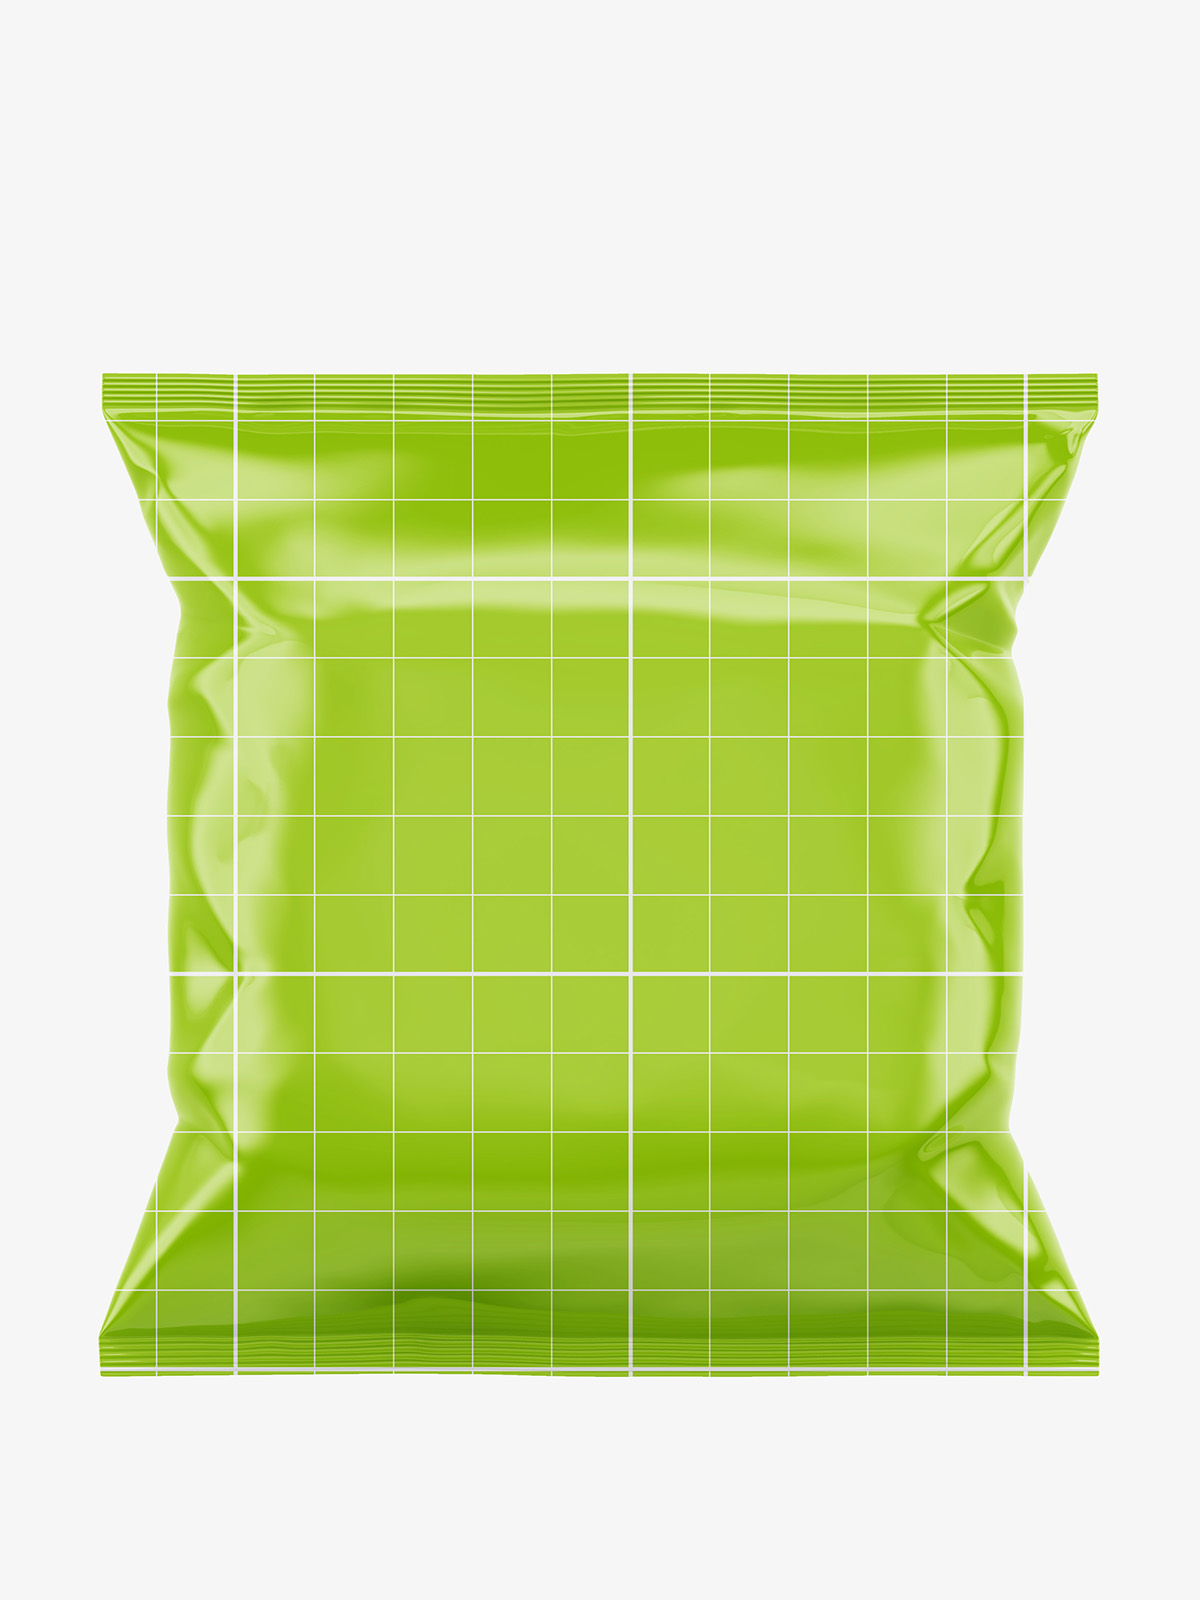 Download Glossy Food Bag Mockup Smarty Mockups Yellowimages Mockups